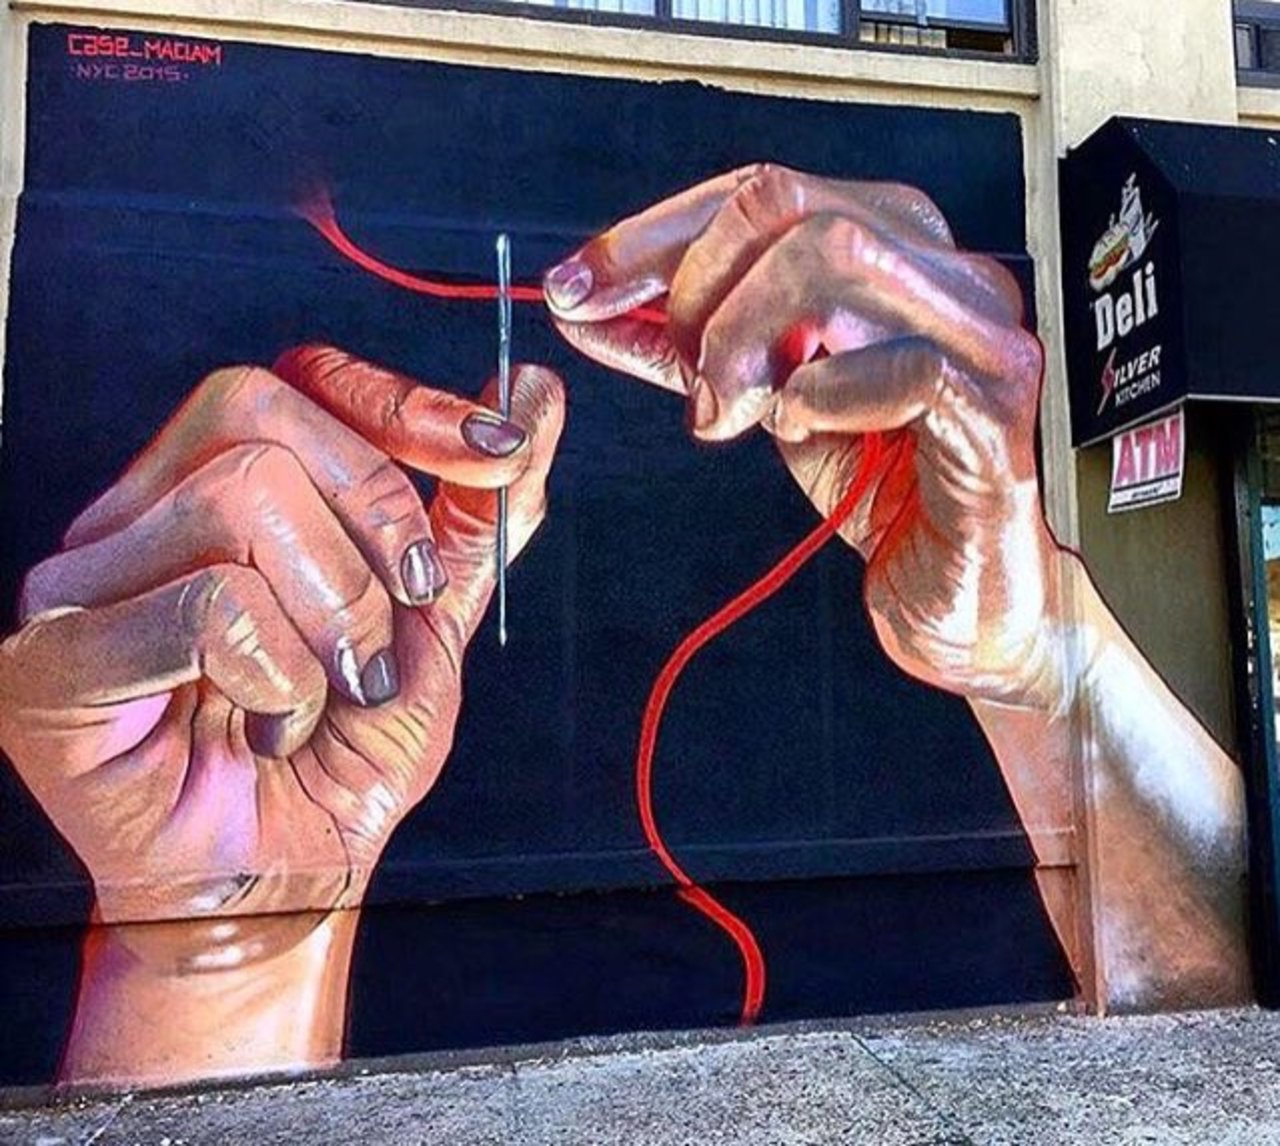 New Street Art by Case Ma'Claim in NYC 

#art #graffiti #mural #streetart https://t.co/ye9ypnKJCd